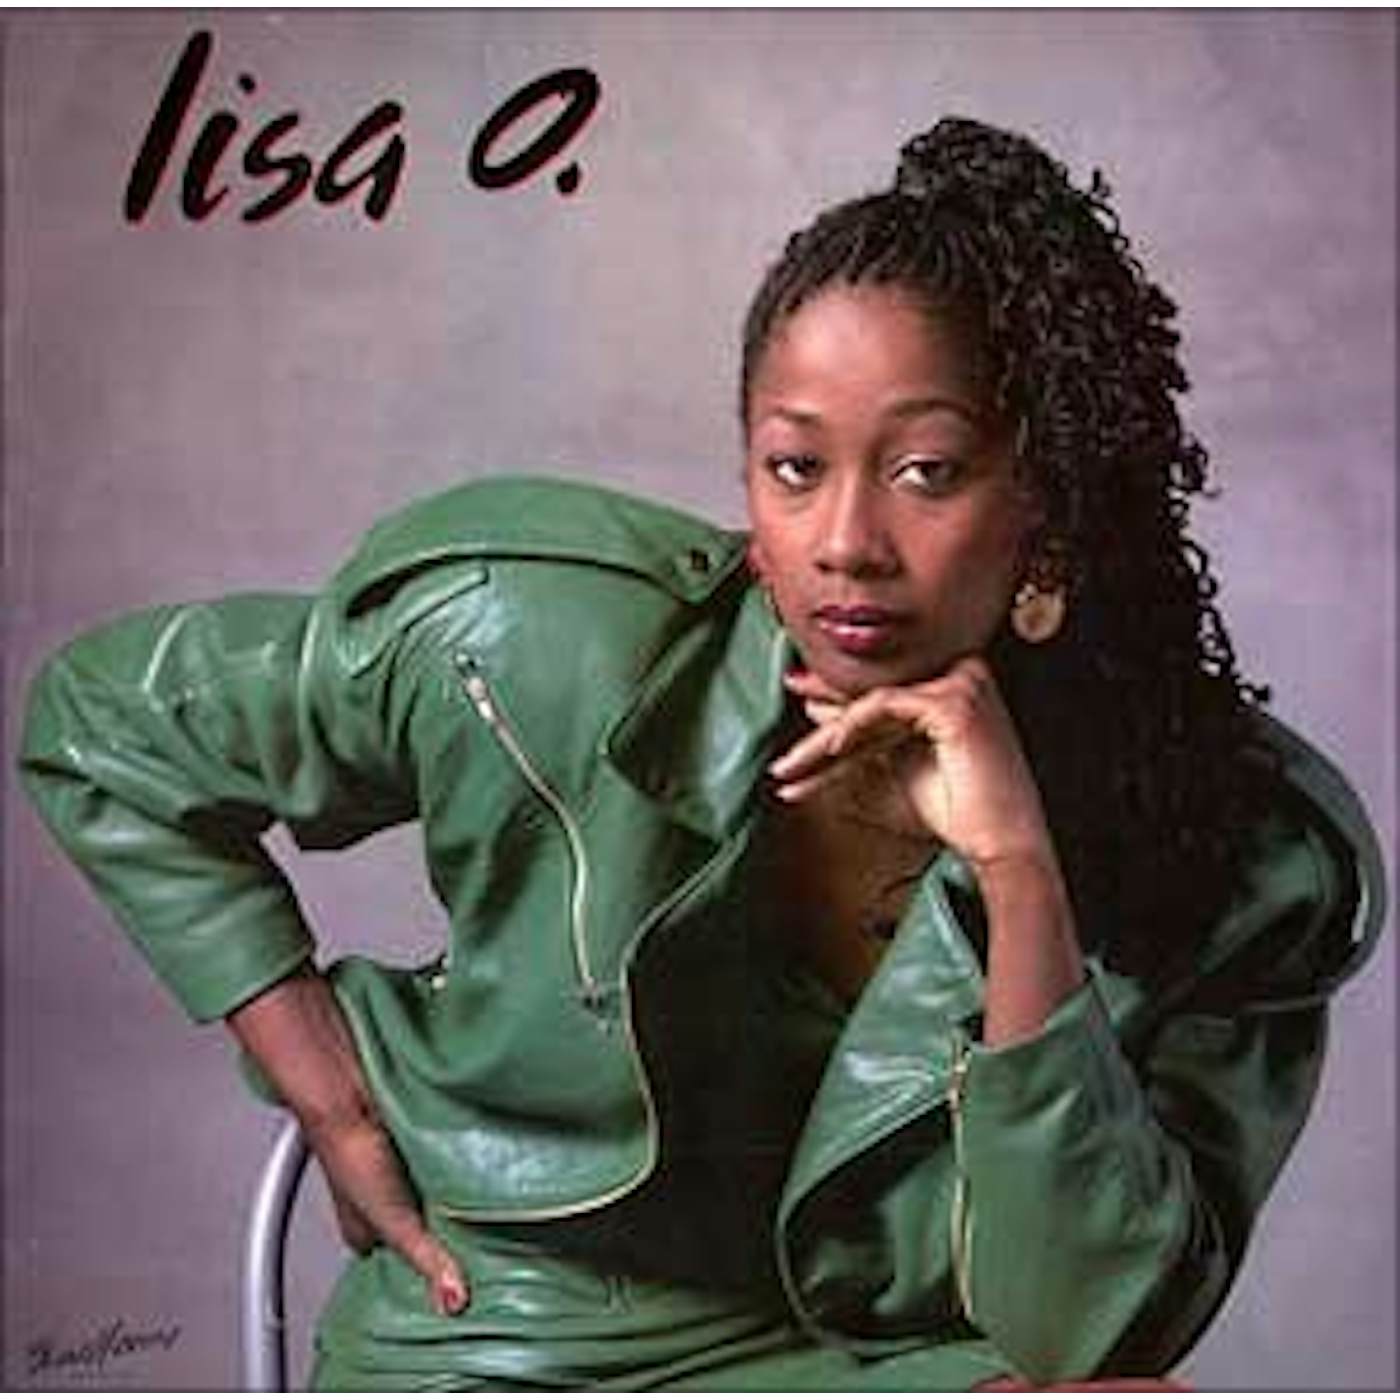 LISA O. Vinyl Record